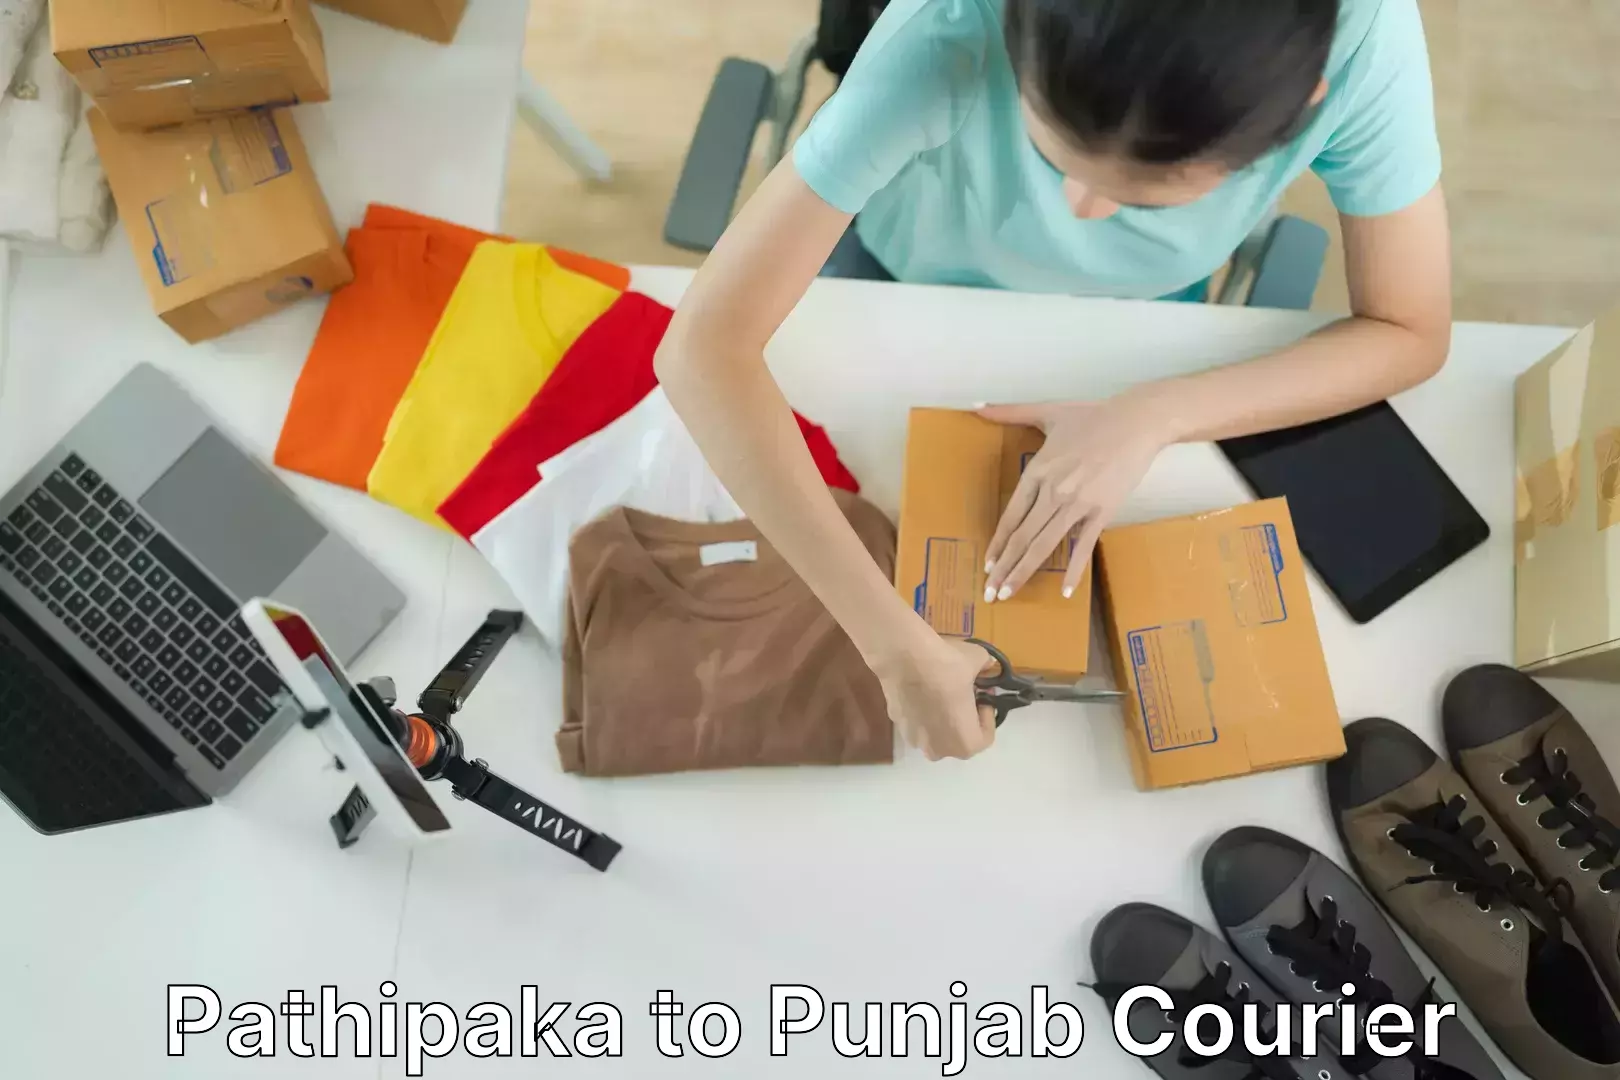 Professional moving company Pathipaka to Punjab